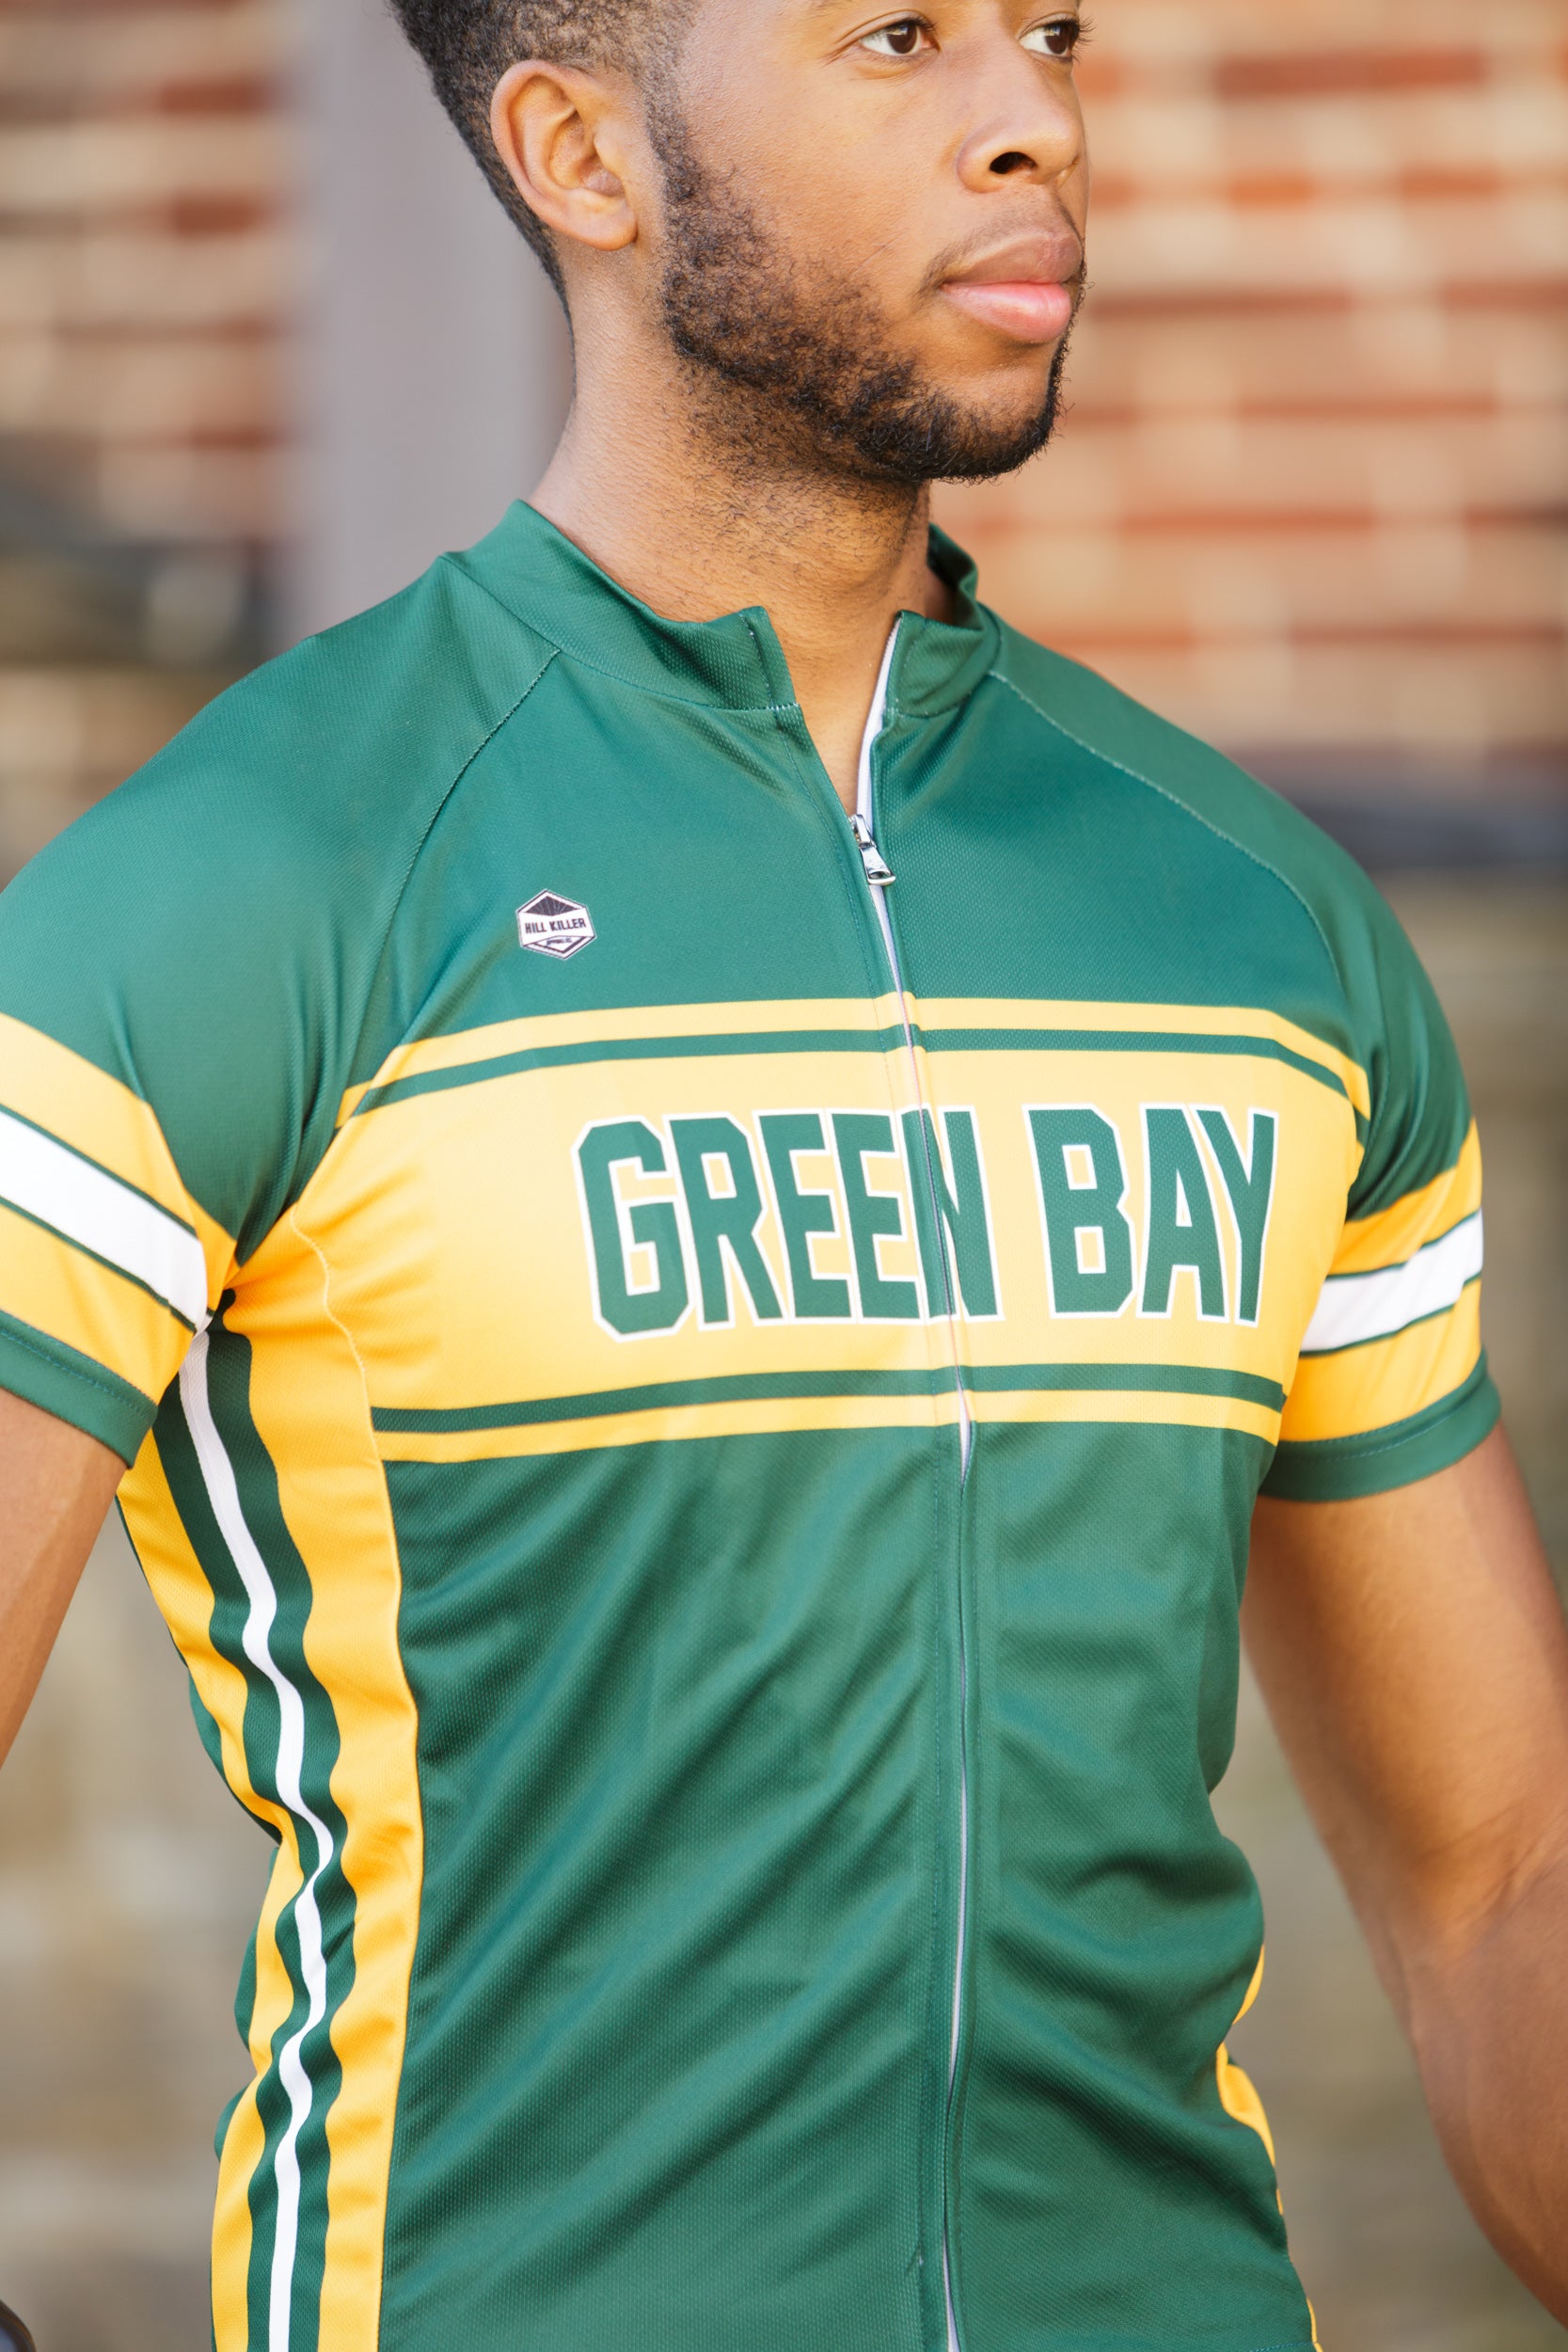 green bay packers bike jersey